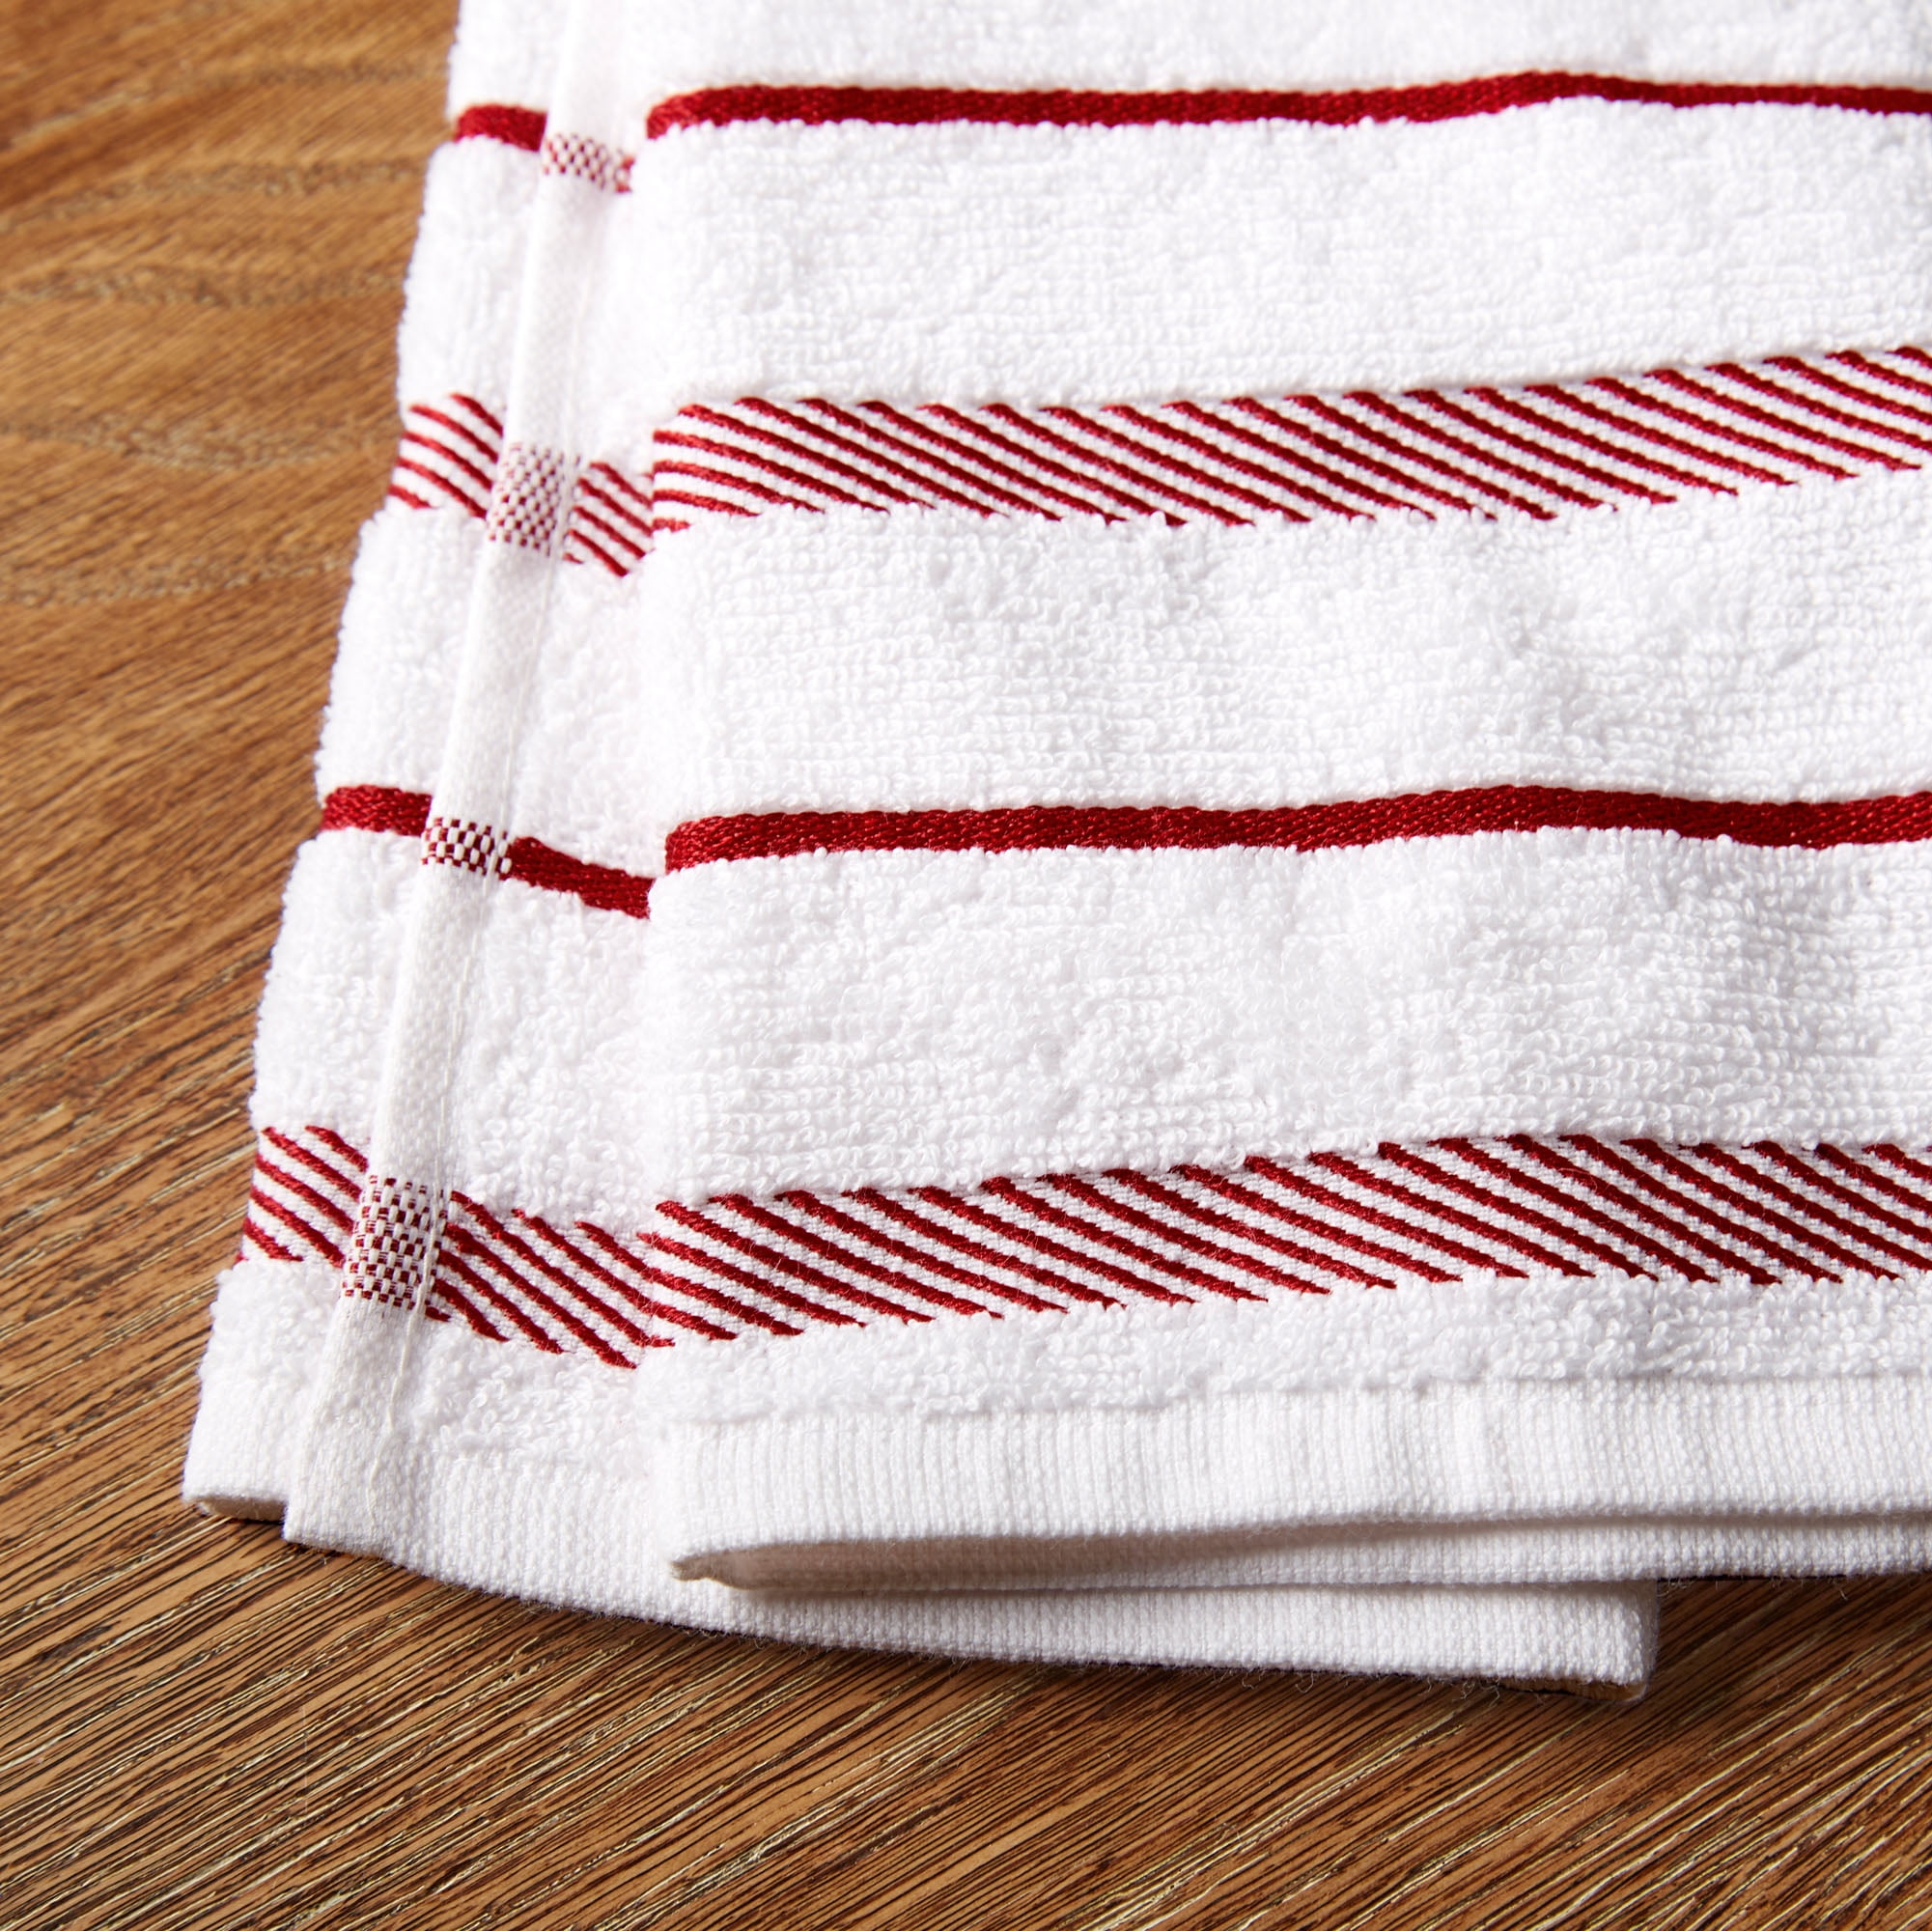 KitchenAid Albany Kitchen Towel 4-Pack Set, Cotton, Grey/White, 16x26